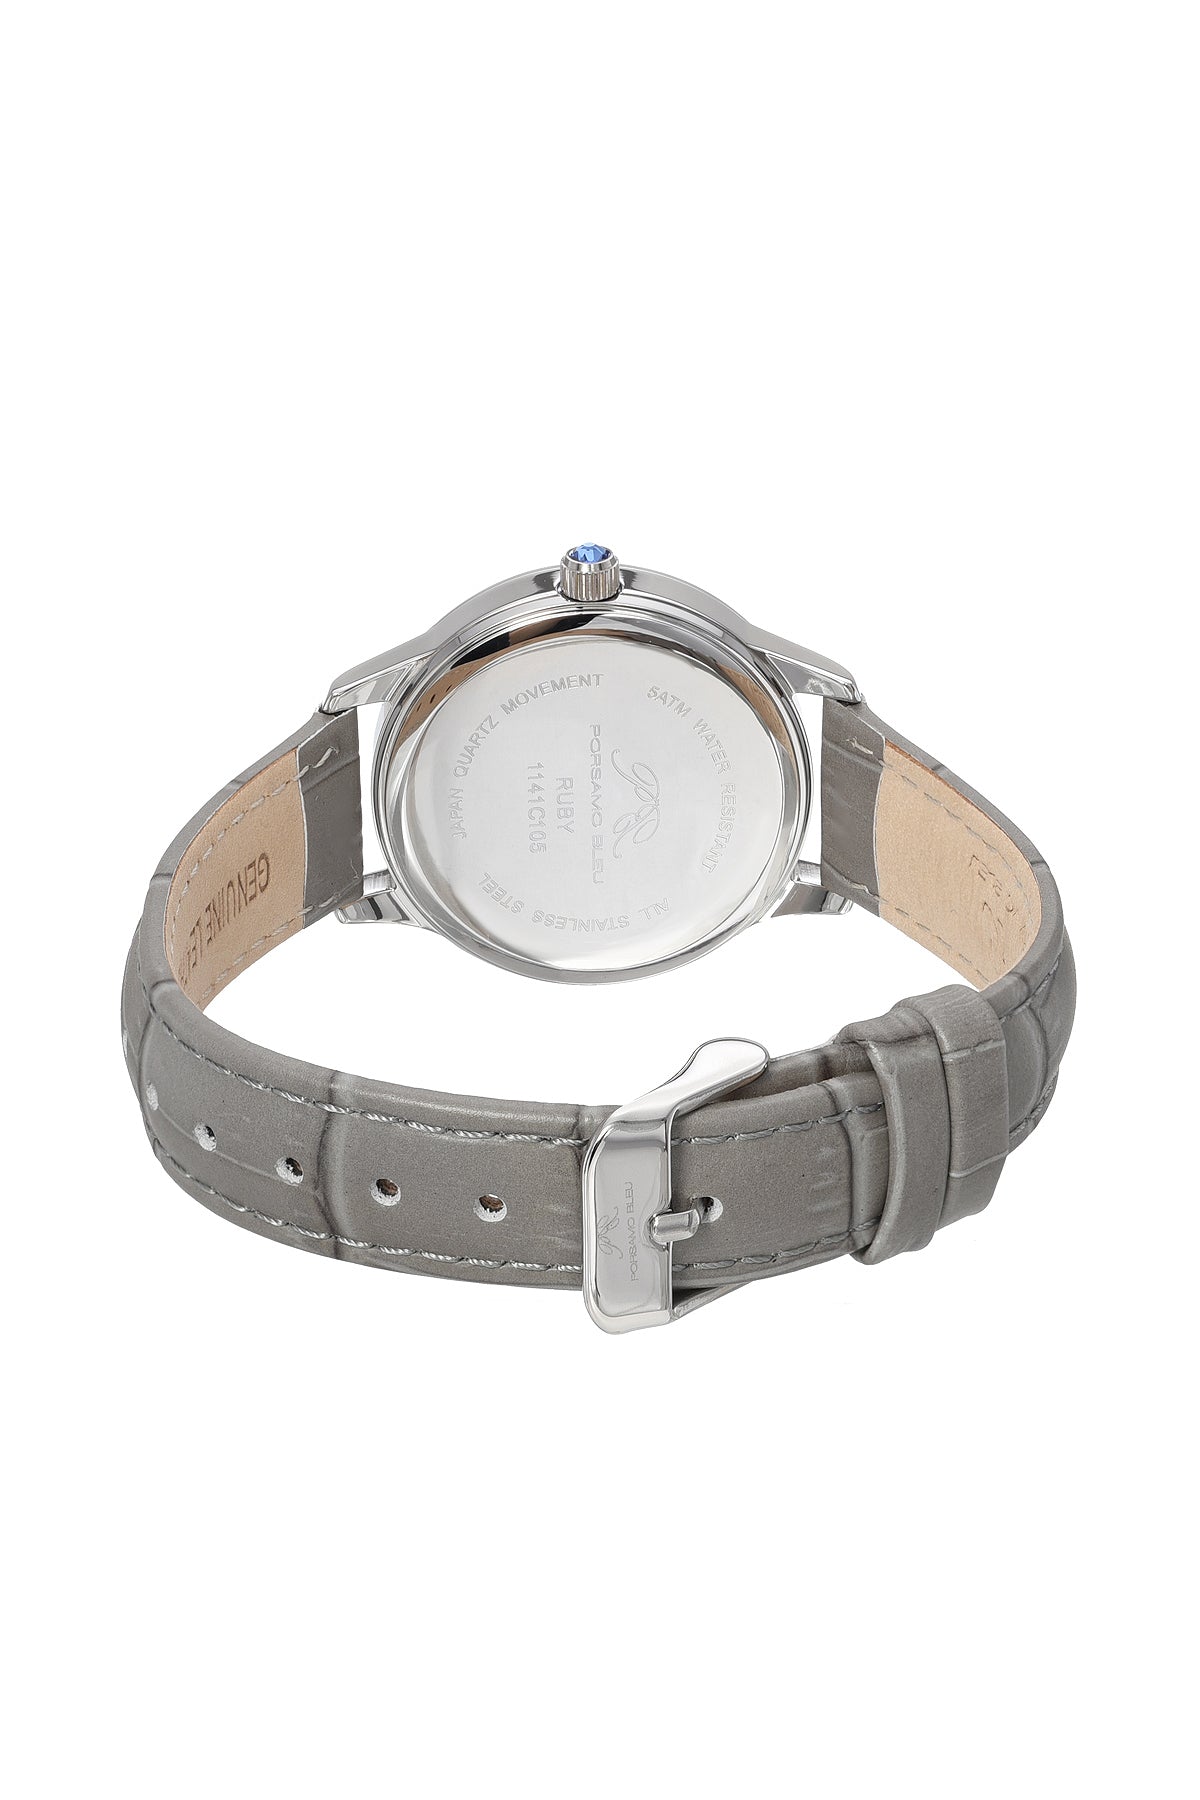 Porsamo Bleu Ruby Luxury Women's Genuine Leather Band Watch, Silver, Grey 1141CRUL